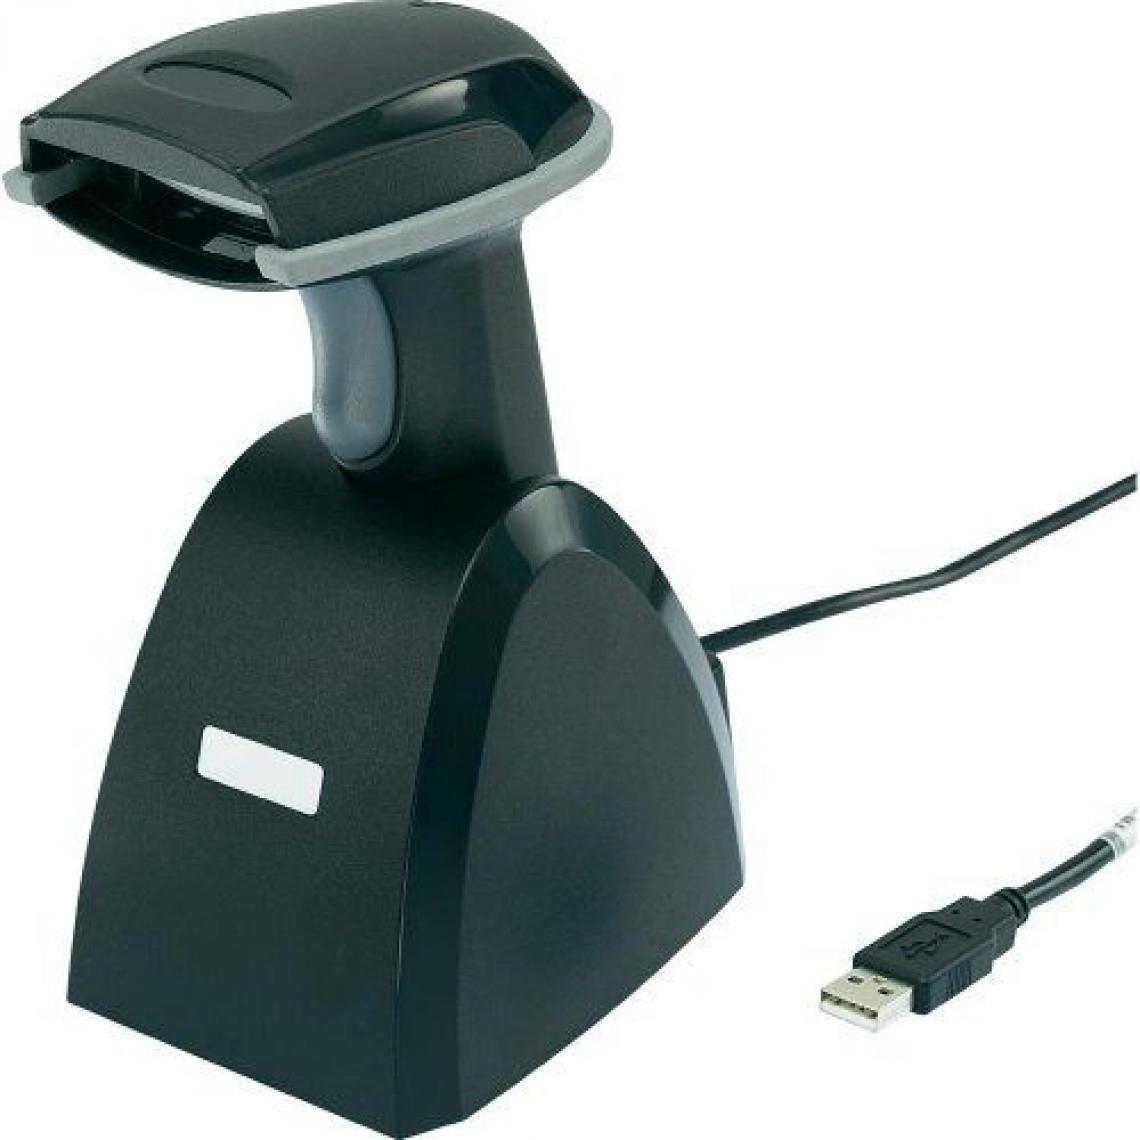 Inconnu - Scanner à codes-barres sans fil 1D Riotec LS6300BU - Bluetooth, USB - Scanner